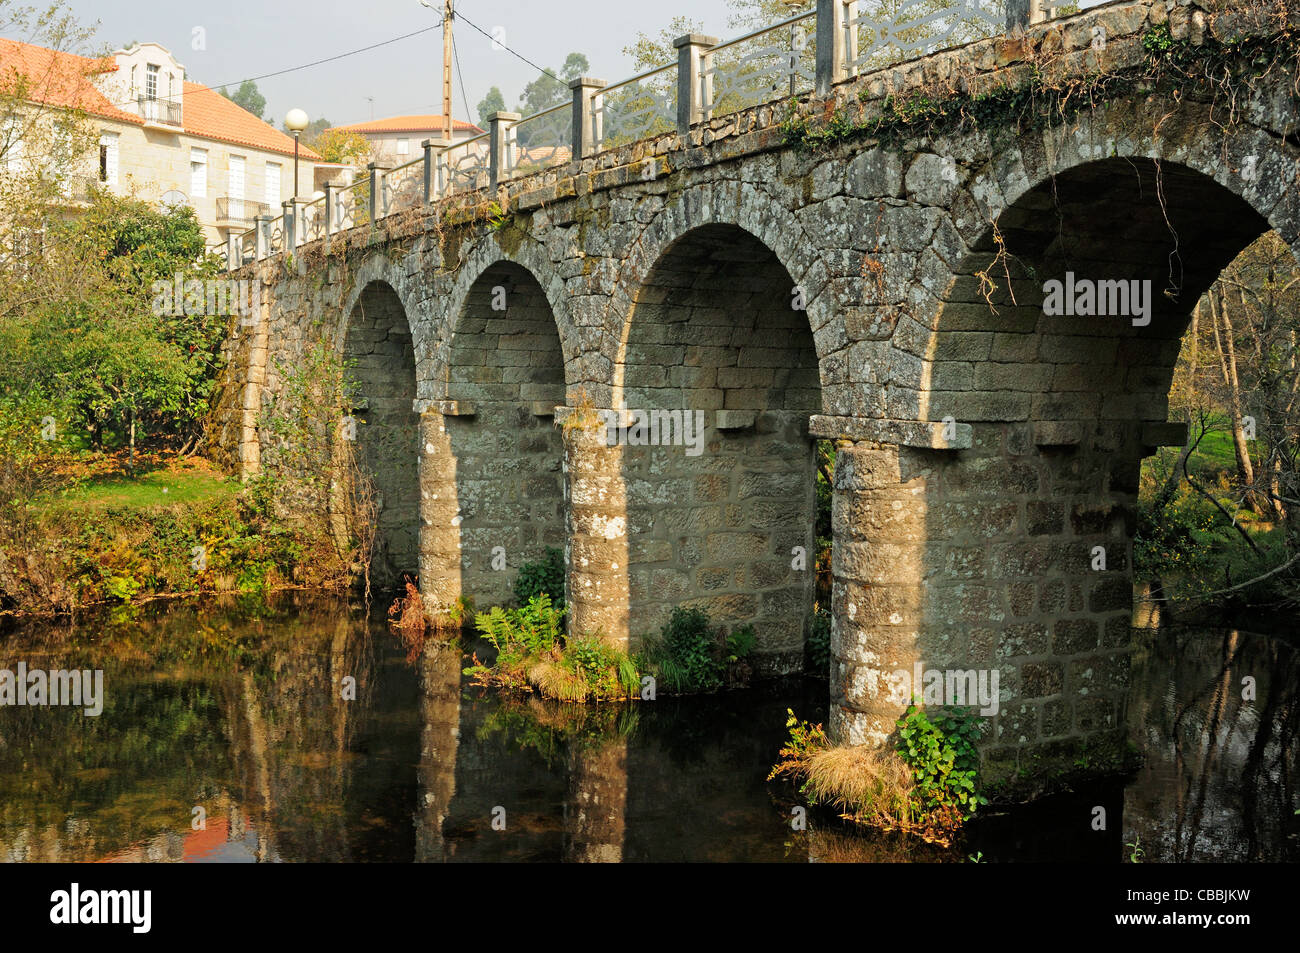 The bridge over the river Verdugo. A Lama, Pontevedra, Galicia, Spain Stock Photo